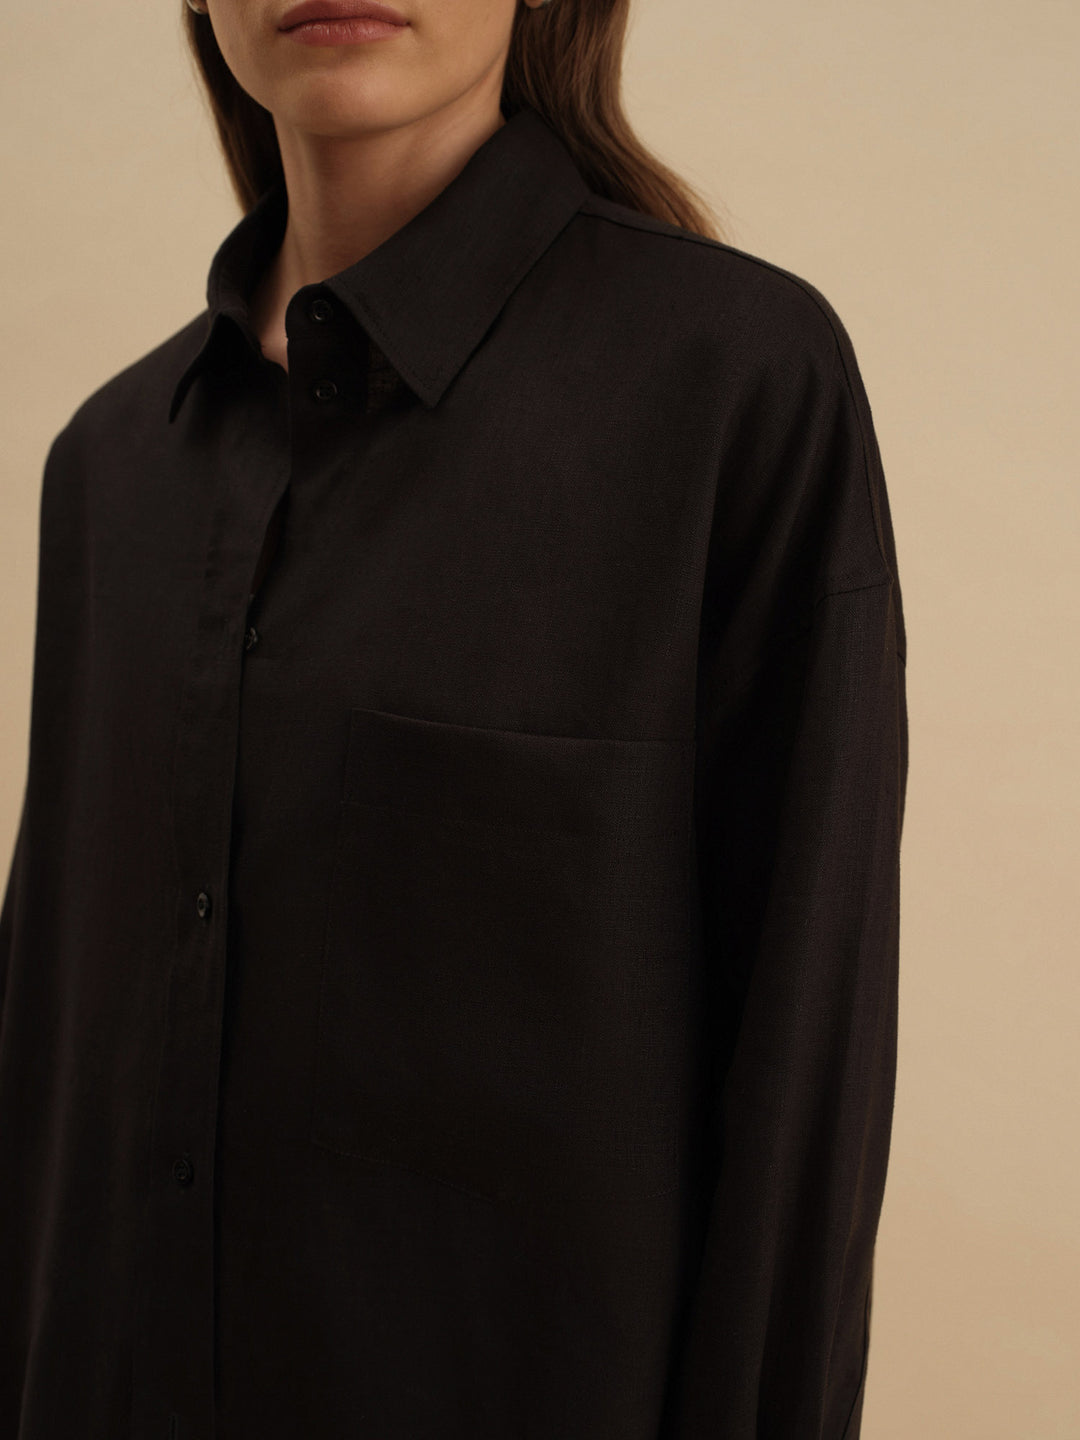 Tuscany linen shirt (black)